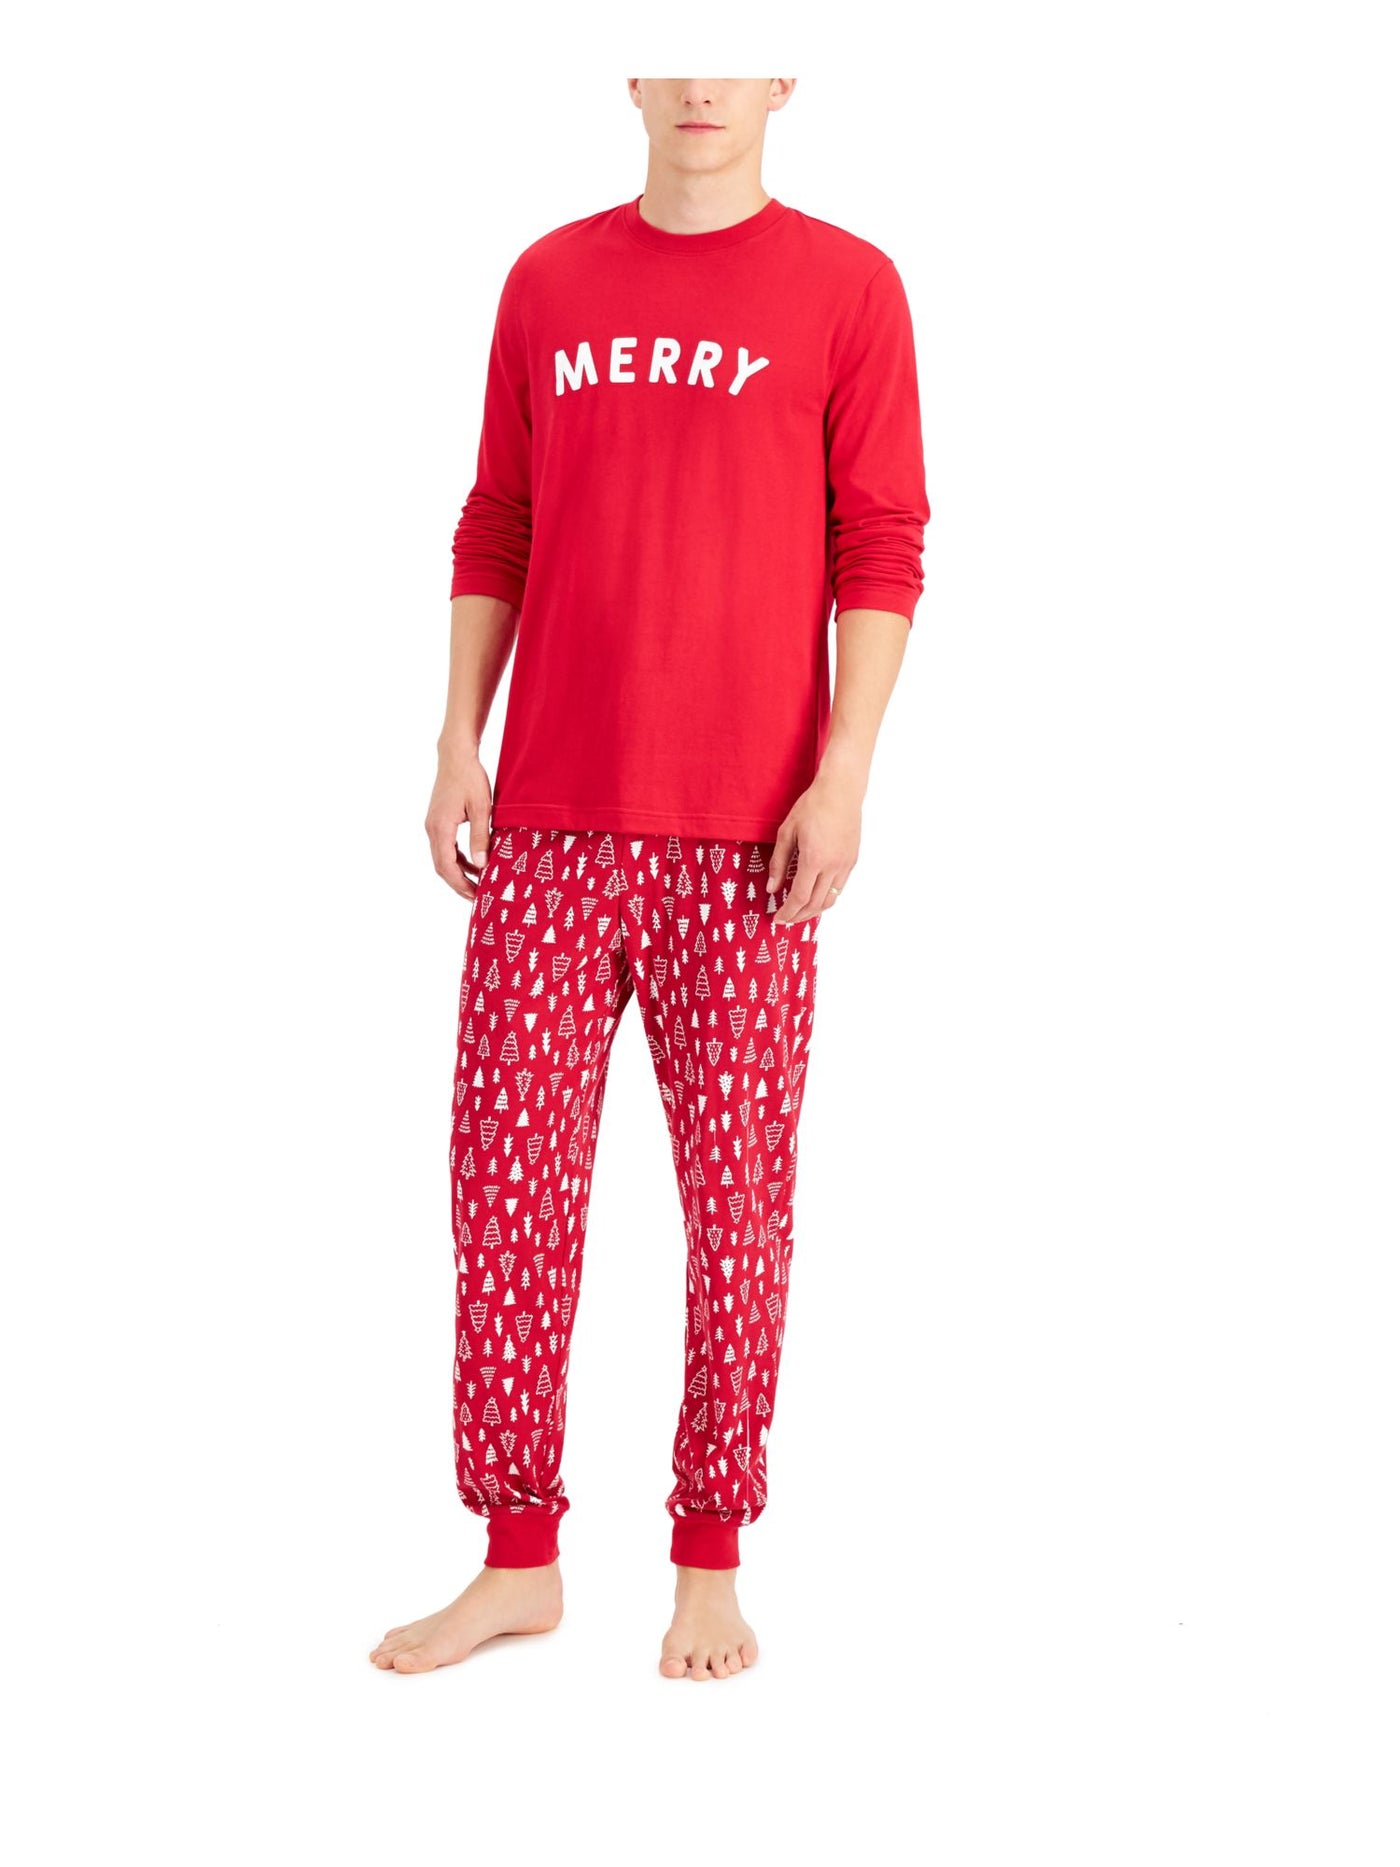 FAMILY PJs Mens Merry Red Printed Drawstring Long Sleeve T-Shirt Top Cuffed Pants Pajamas L